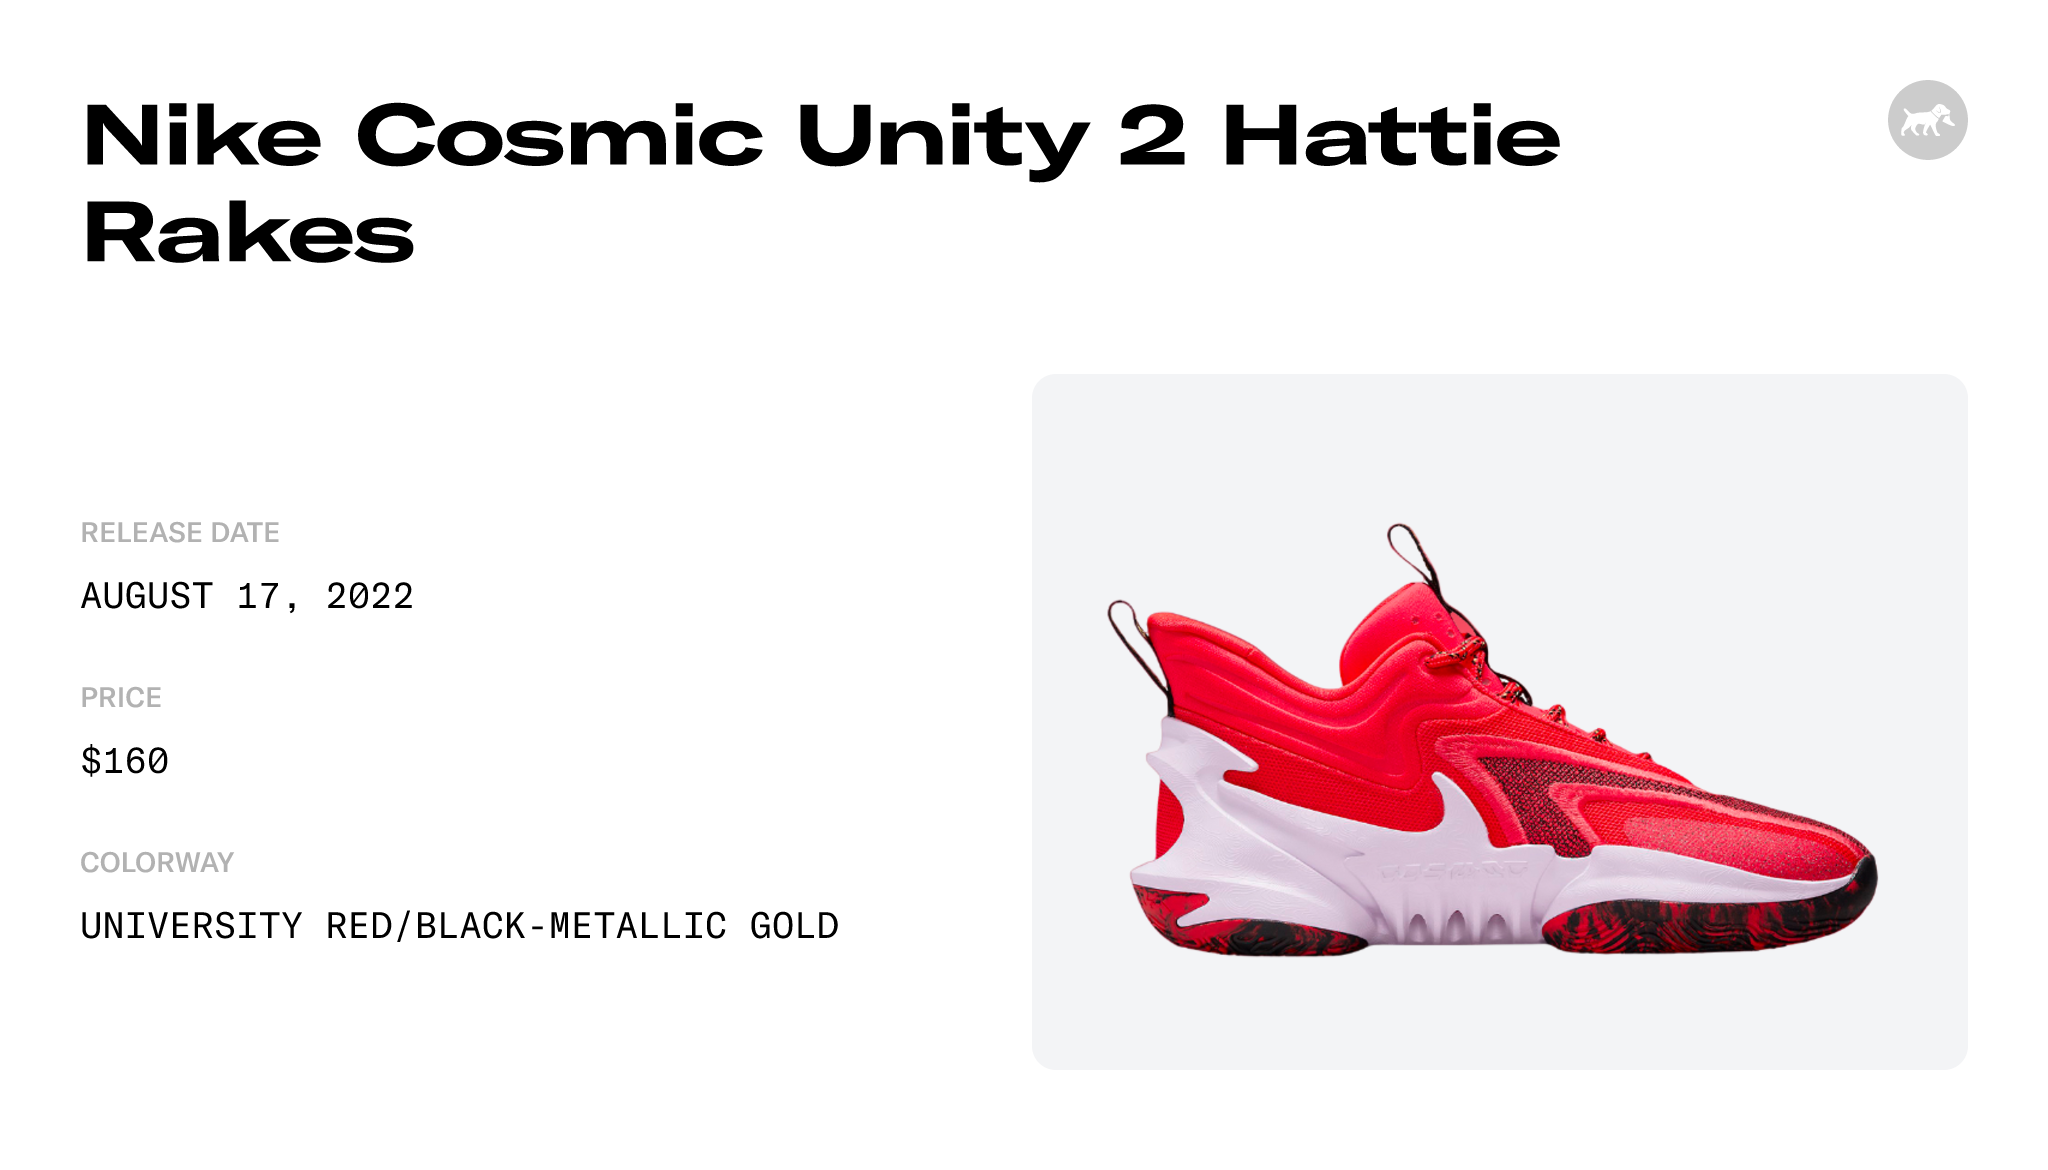 Nike Cosmic Unity 2 Hattie Rakes - DH1537-601 Raffles and Release Date